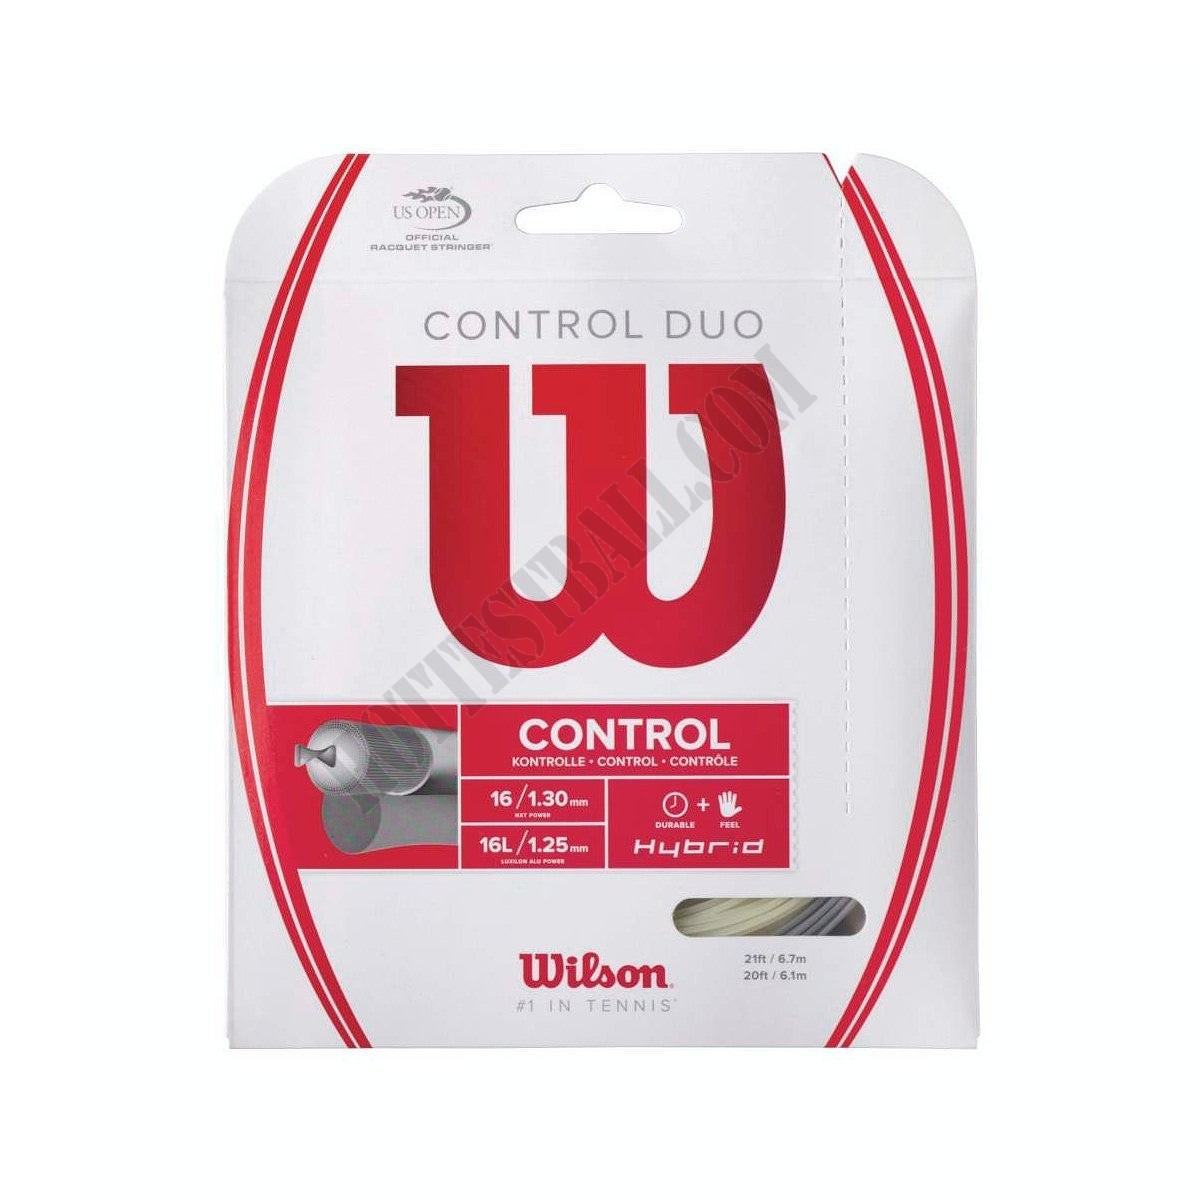 Duo Control Hybrid Tennis String Set - Natural - Wilson Discount Store - Duo Control Hybrid Tennis String Set - Natural - Wilson Discount Store